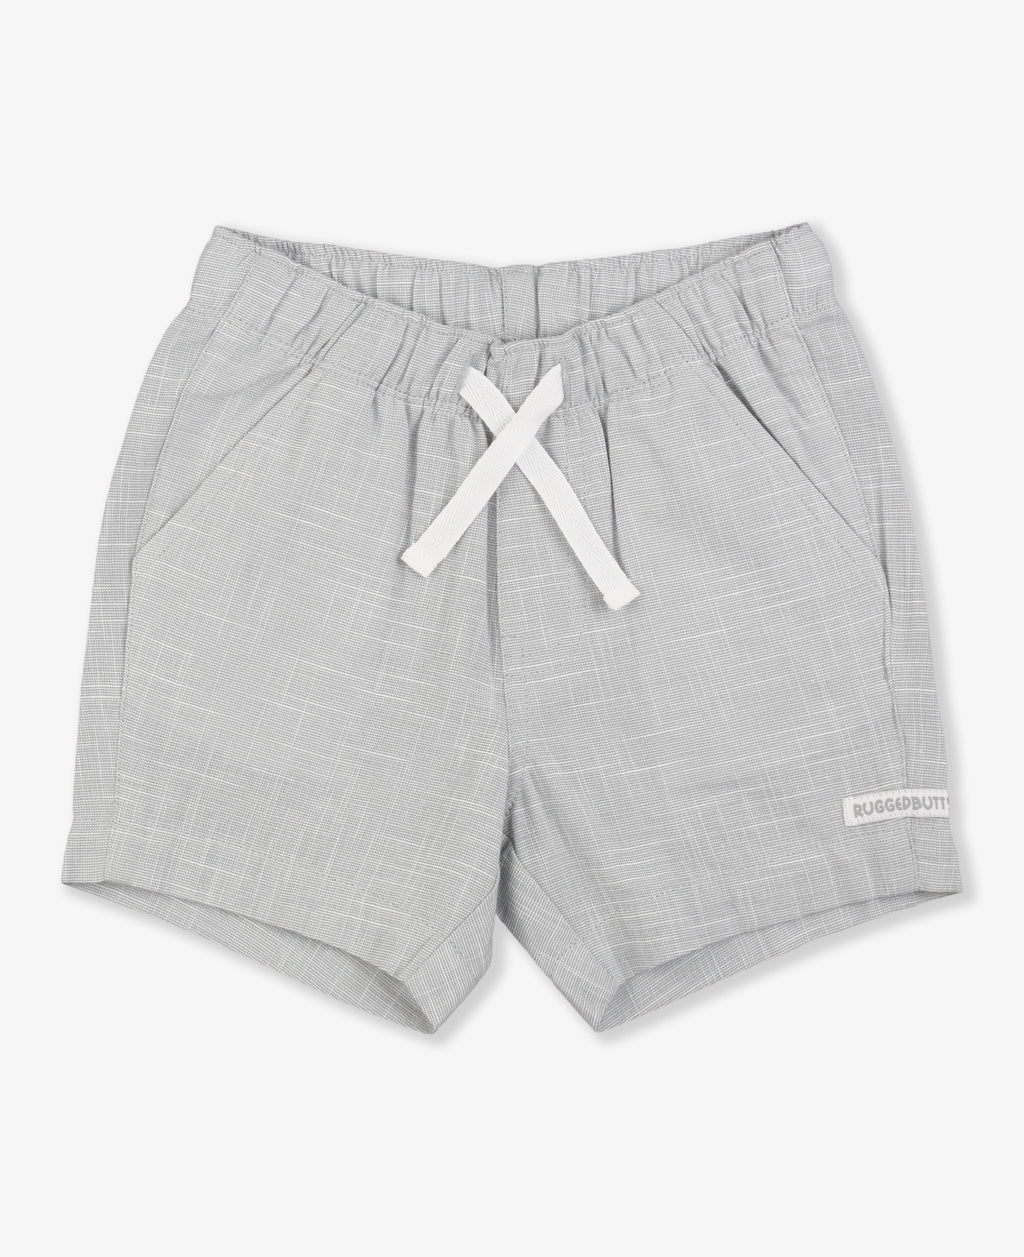 Harbor Gray Pull-on Shorts